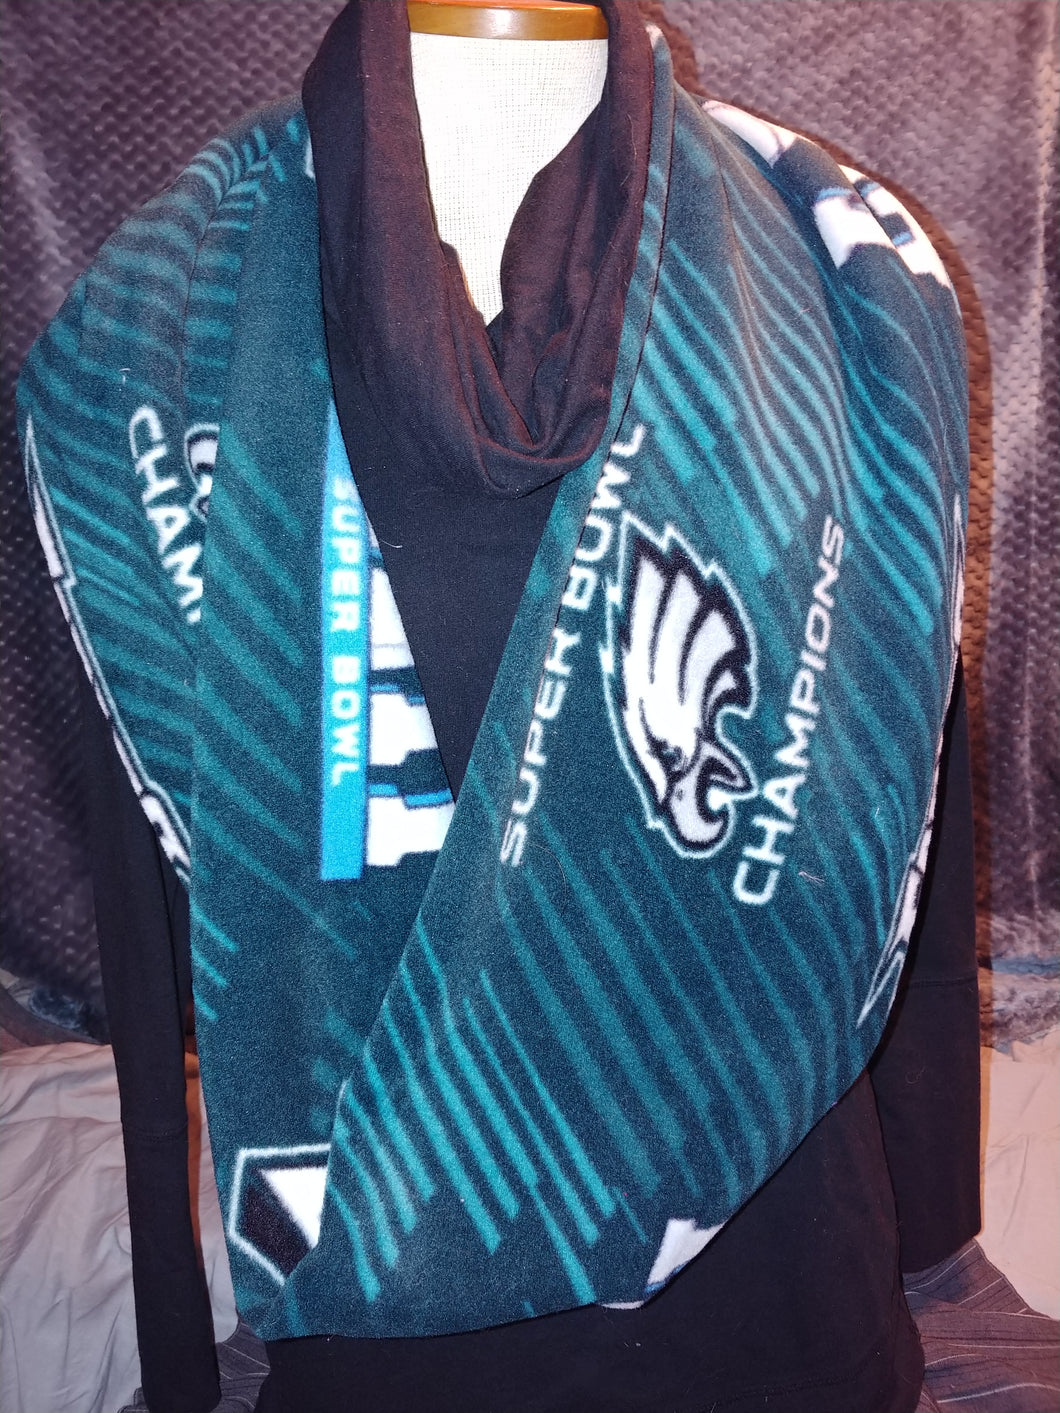 Team Infinity scarf - Eagles Superbowl Champions fleece